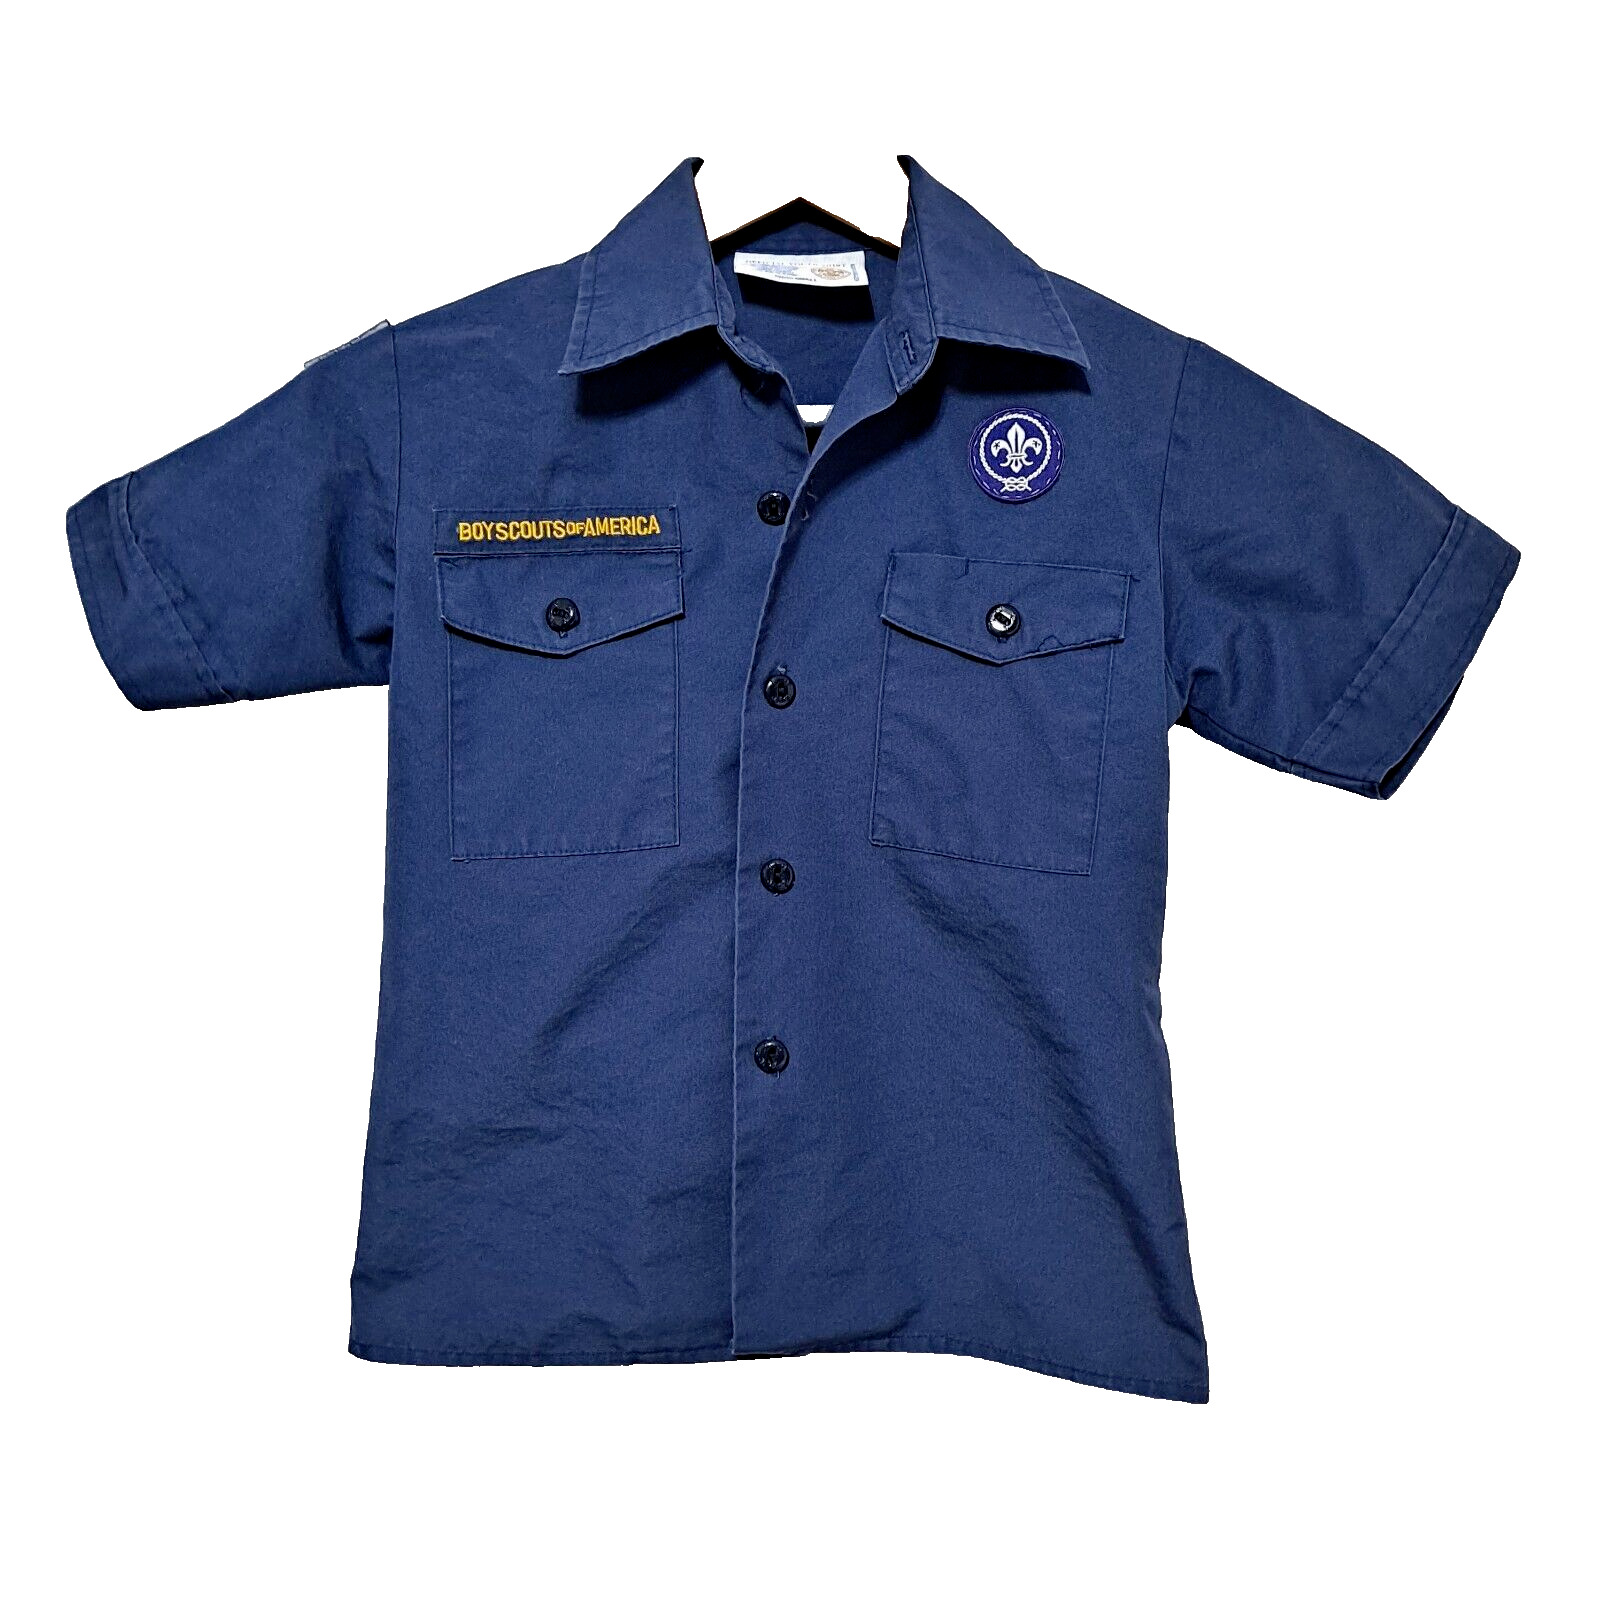 Boy Scout America Uniform Shirt Boy Small Cub Scouts Patches BSA Blue Top Collar